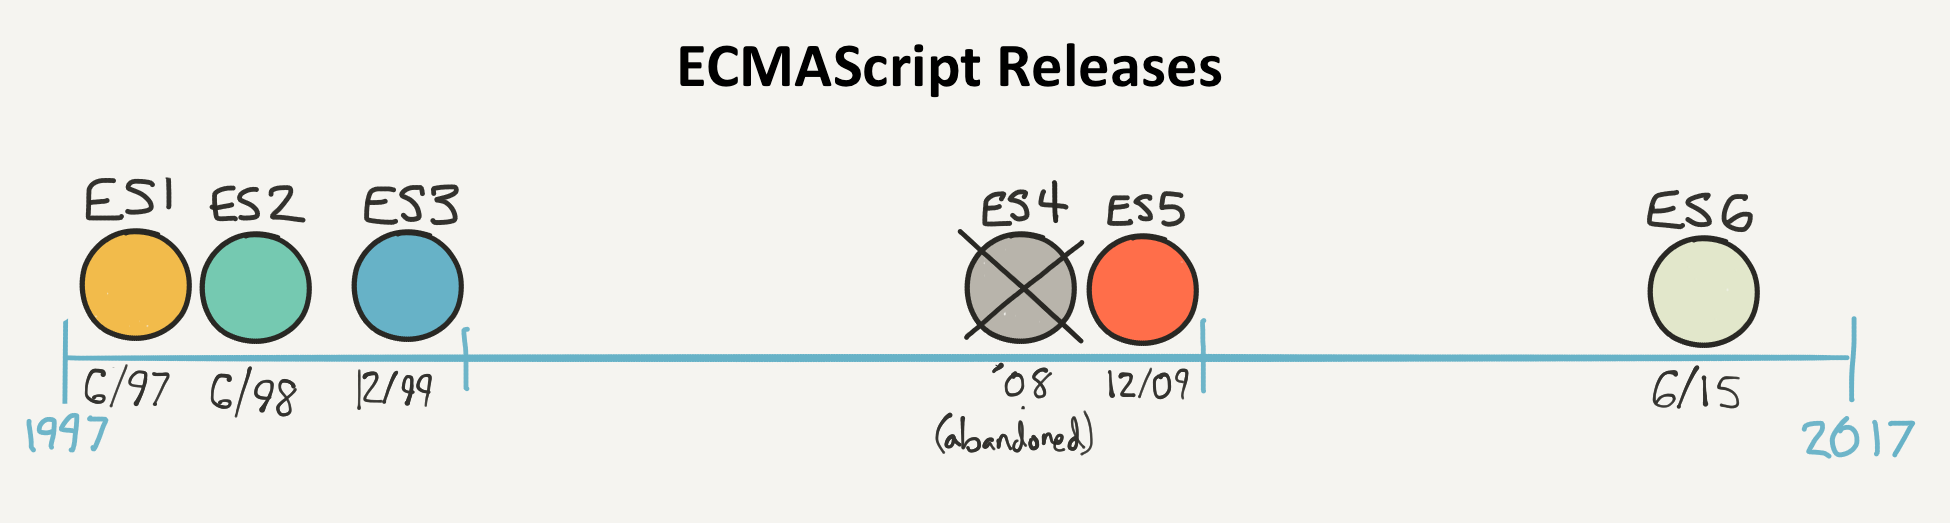 ECMAScript releases before 2017